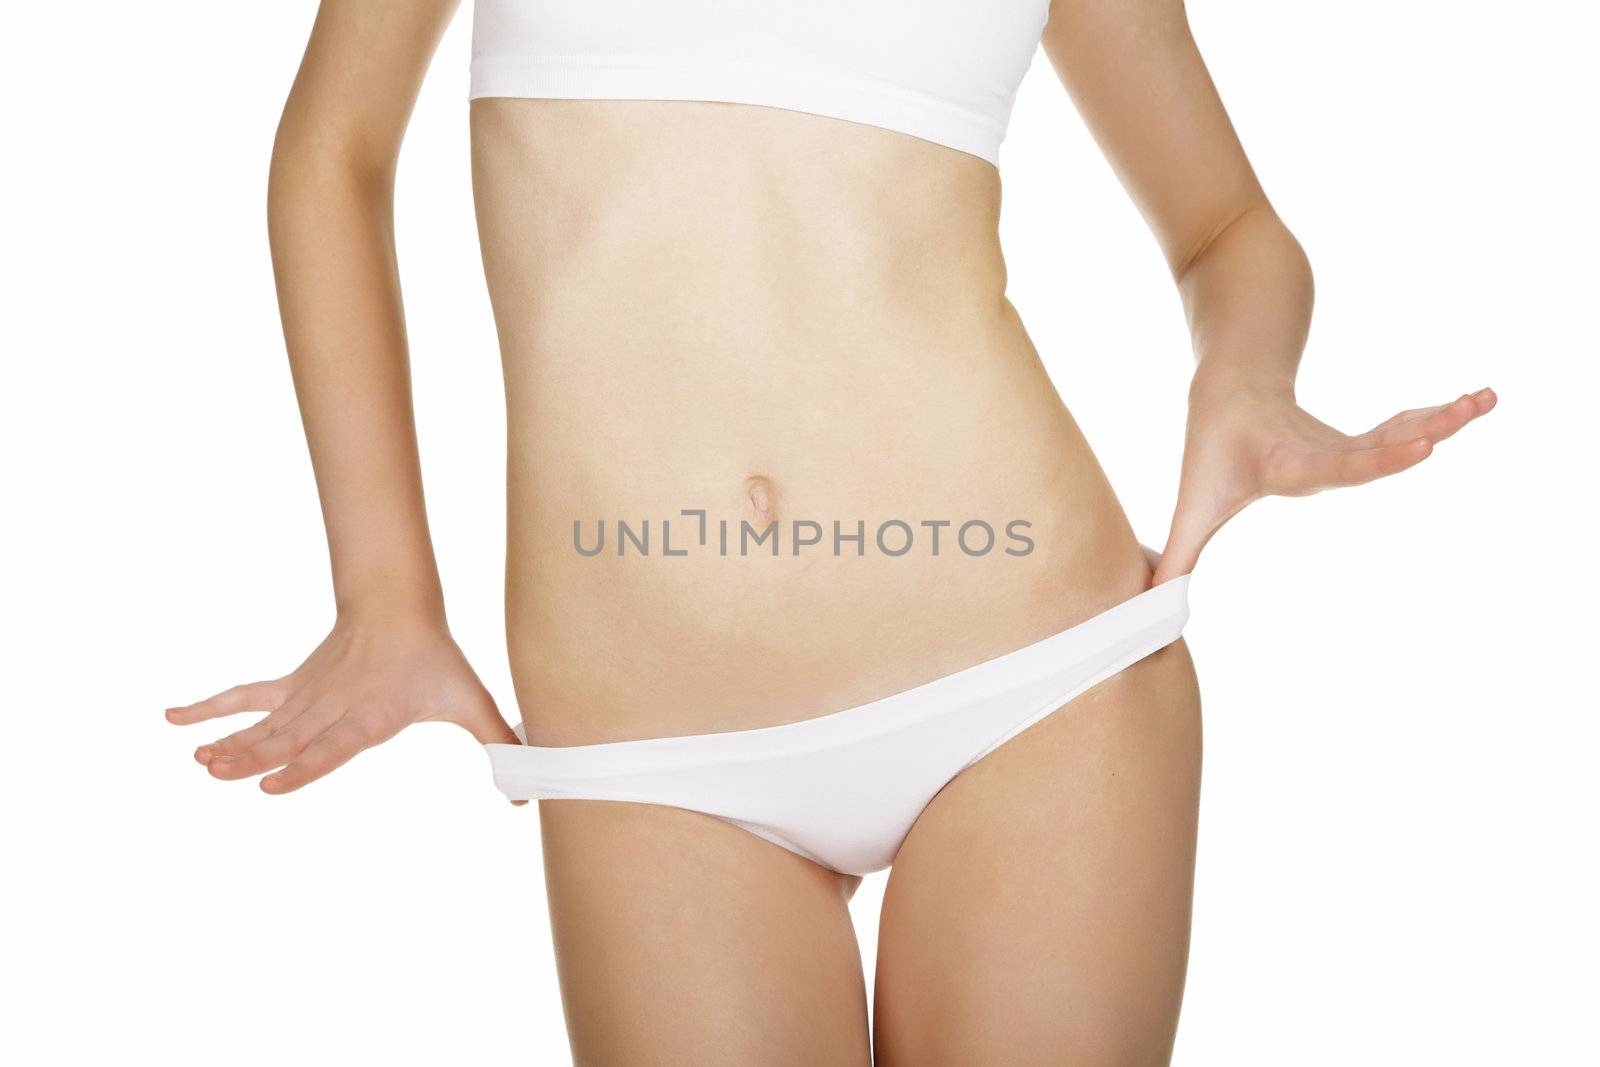 Slim female body, isolated over white background